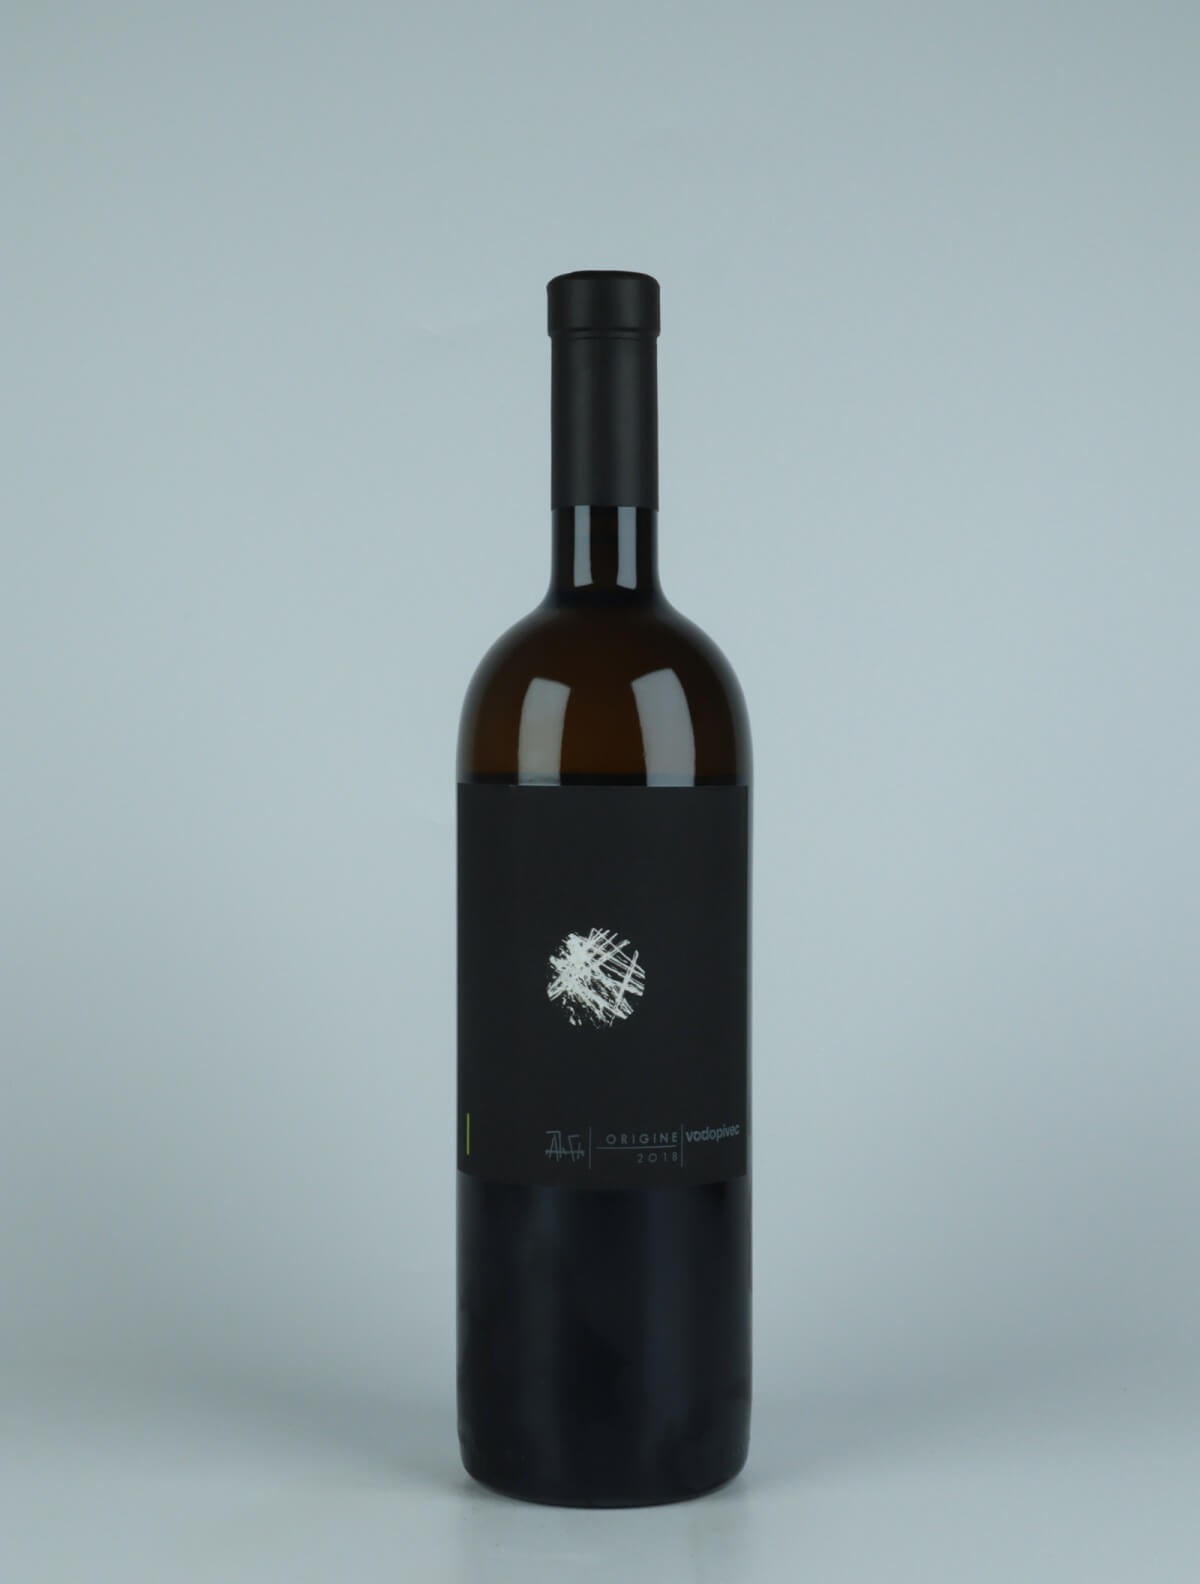 En flaske 2018 Origine Orange vin fra Paolo Vodopivec, Friuli i Italien